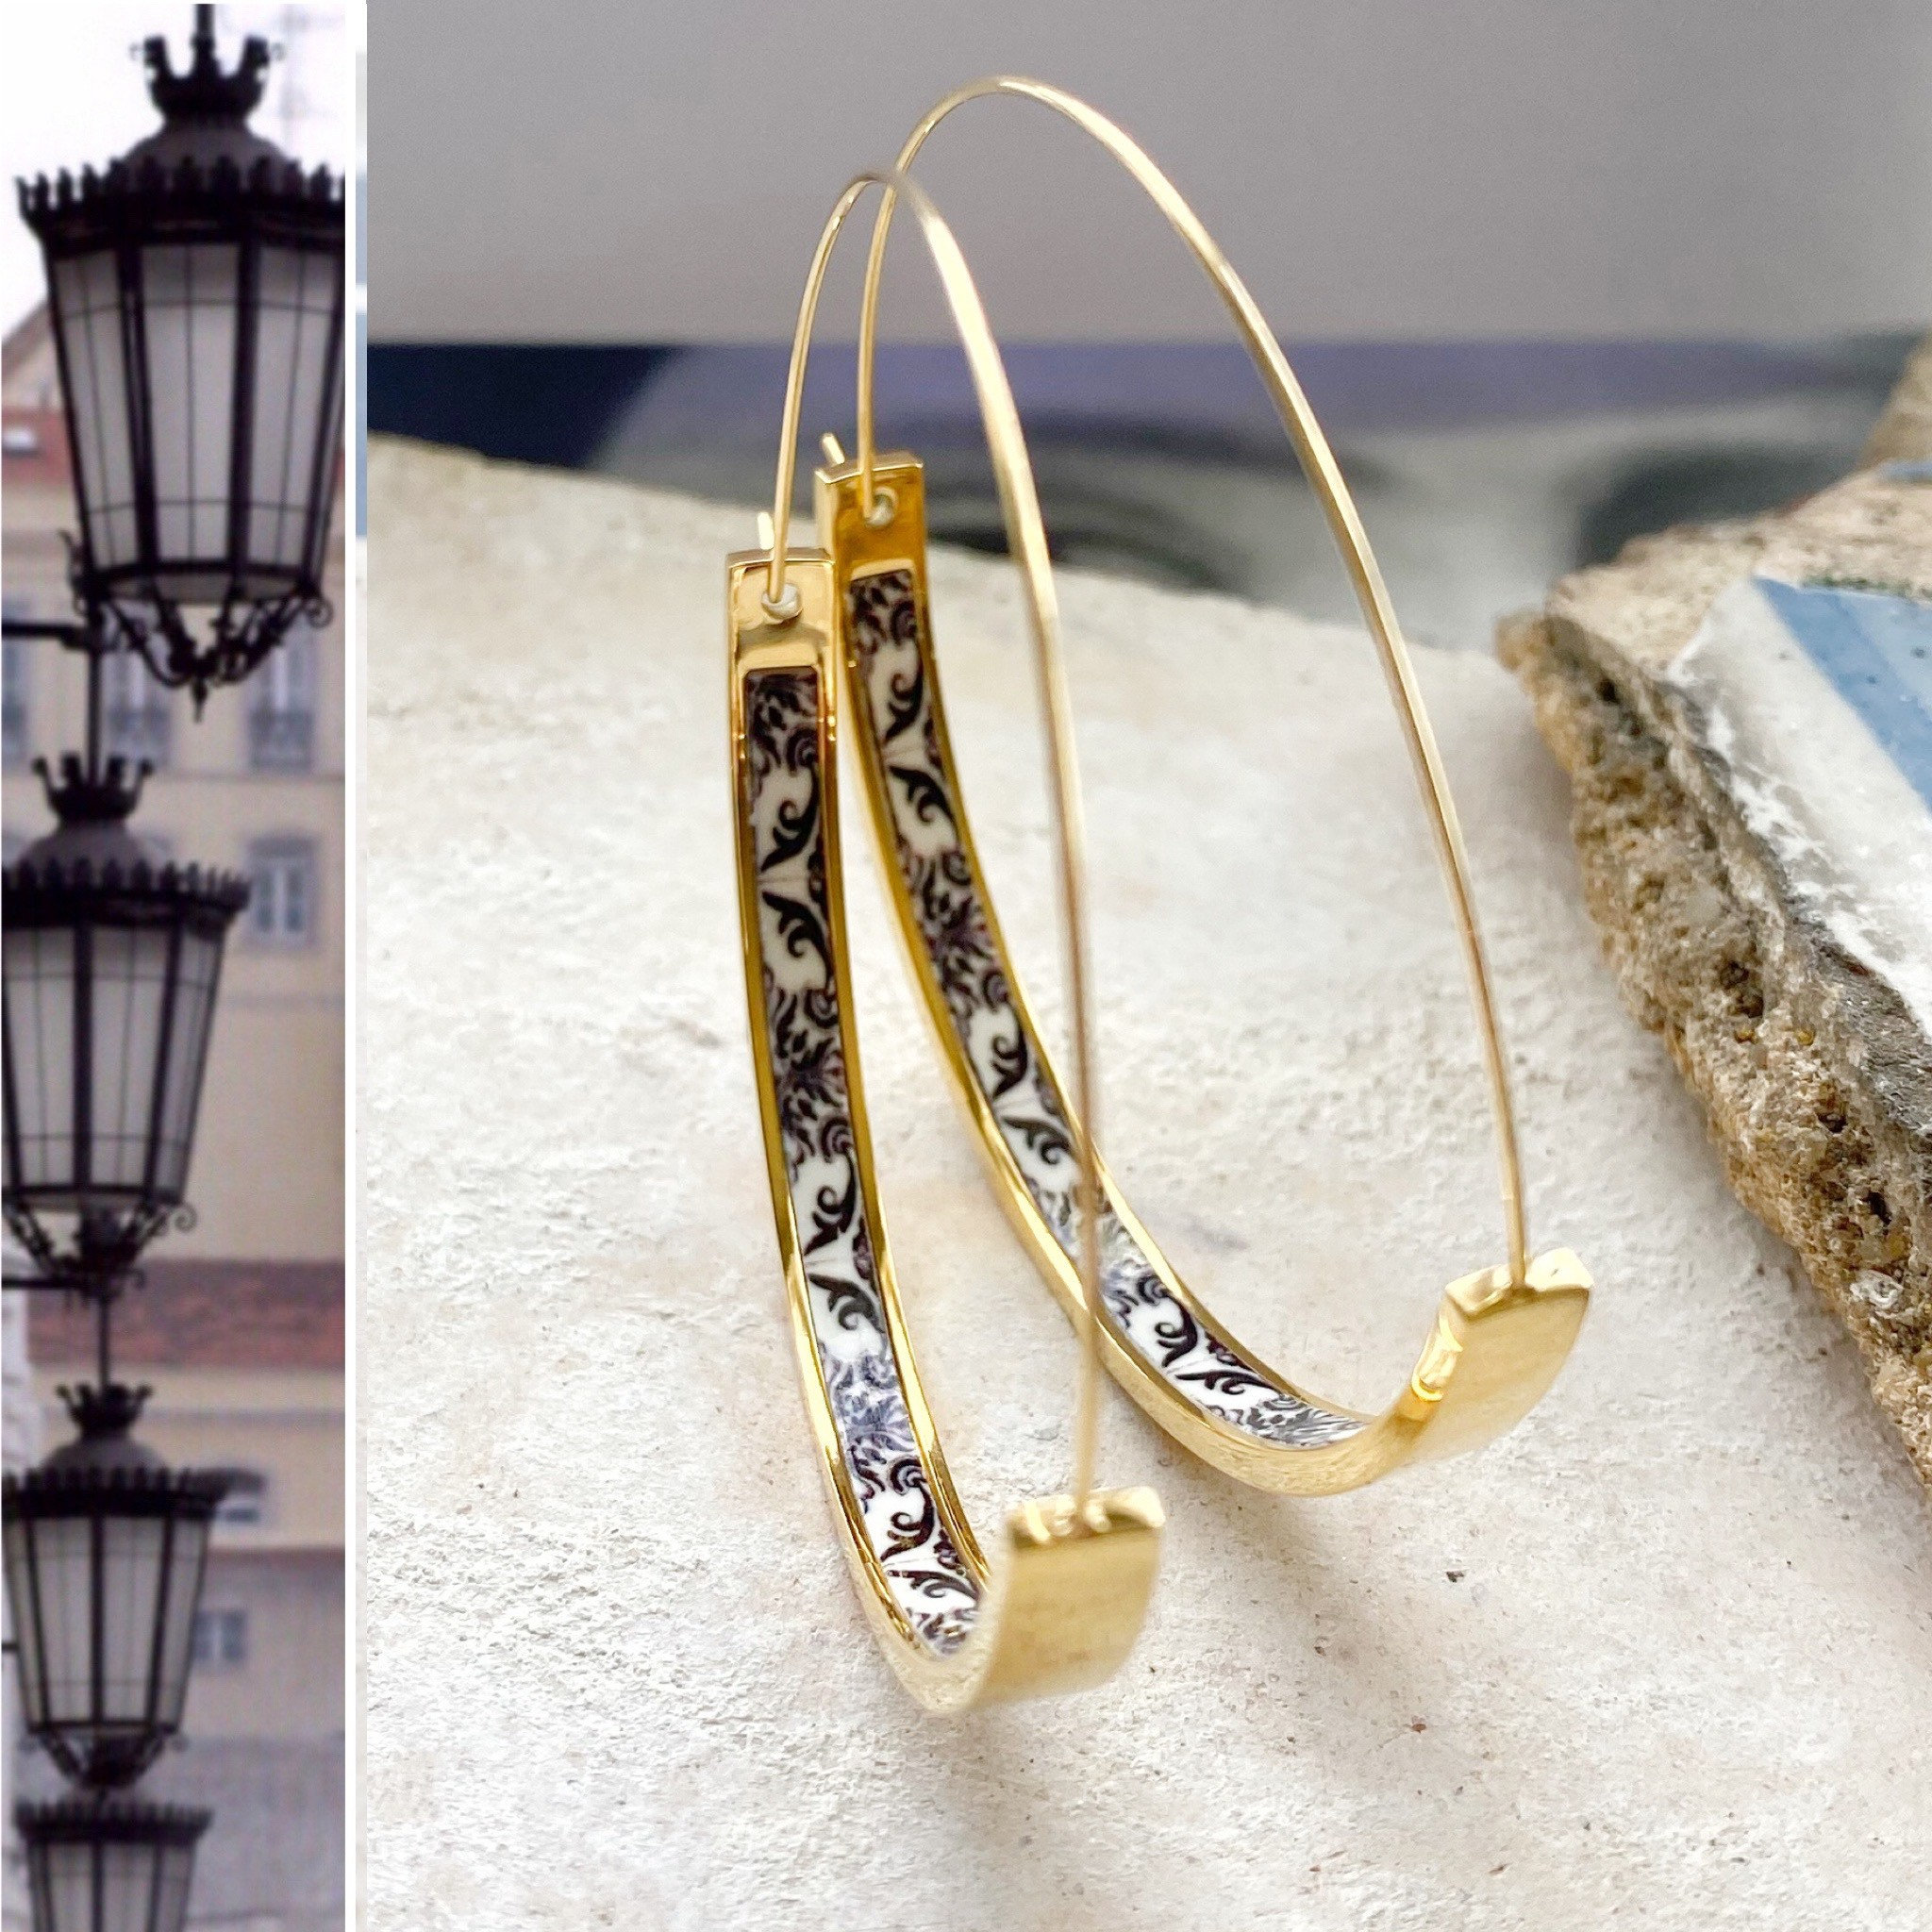 Gold Vintage Bead Hoop Earrings | Women's Jewelry by Uncommon James